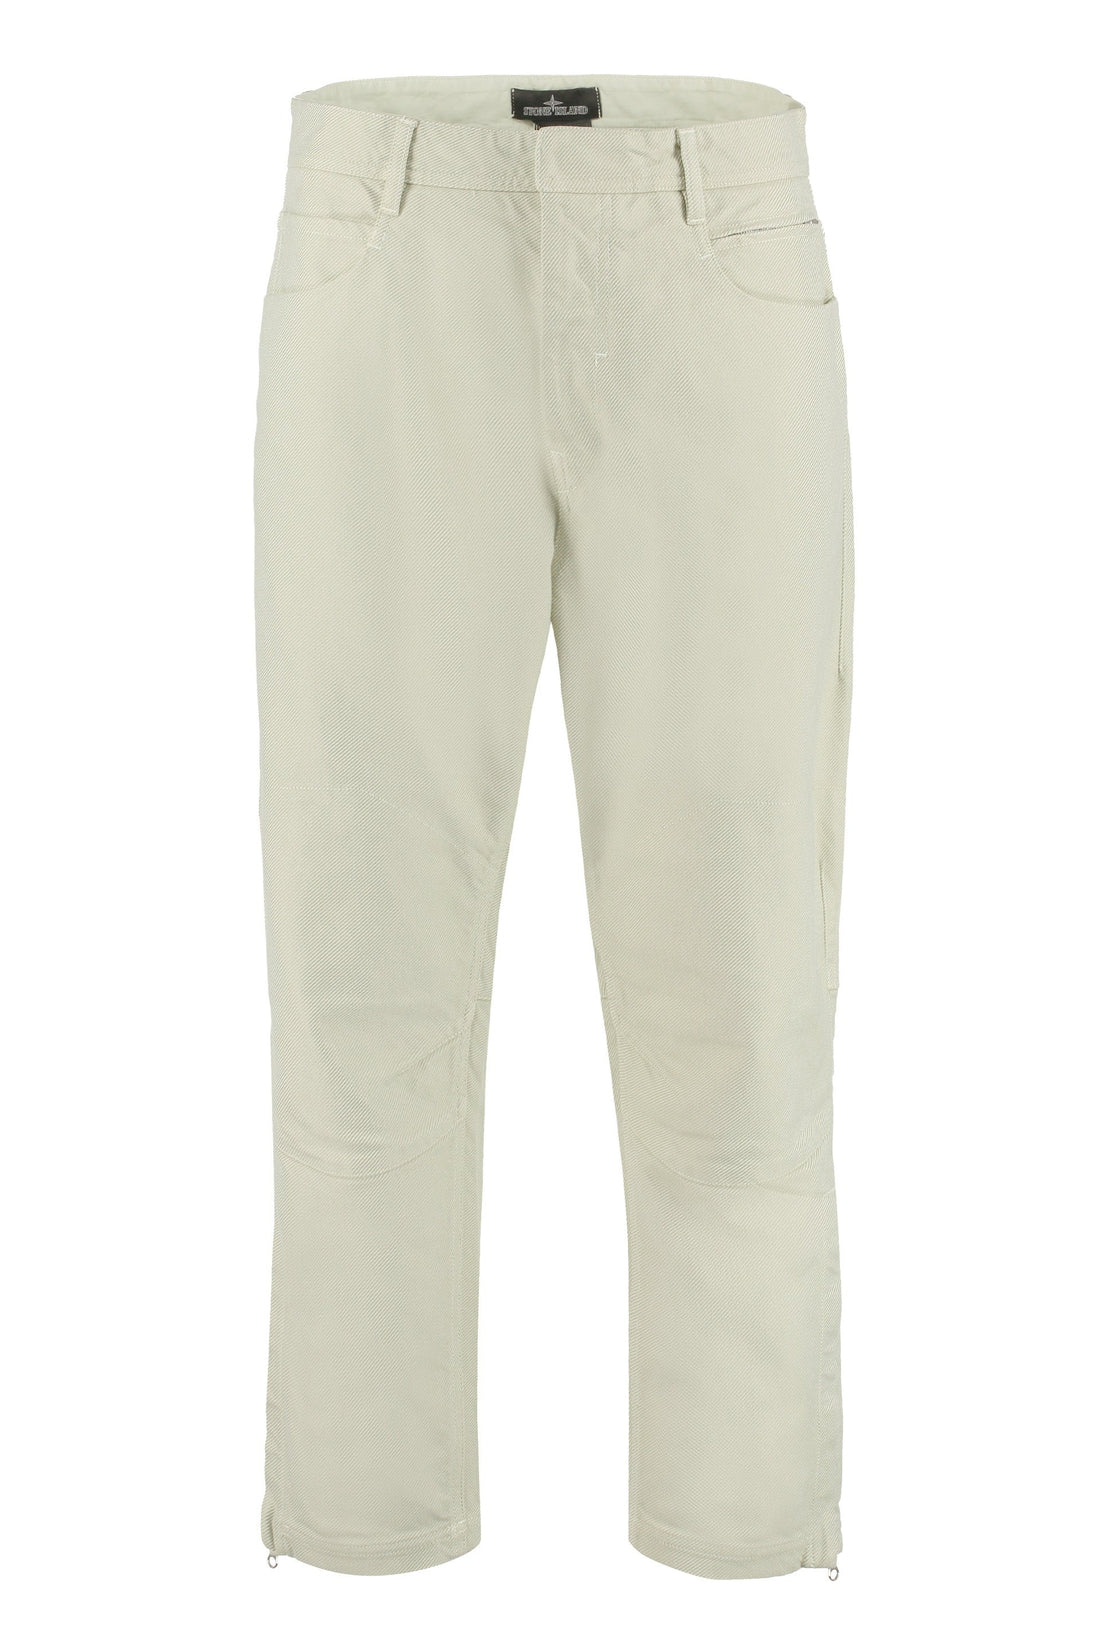 Stone Island Shadow Project-OUTLET-SALE-Cotton blend trousers-ARCHIVIST